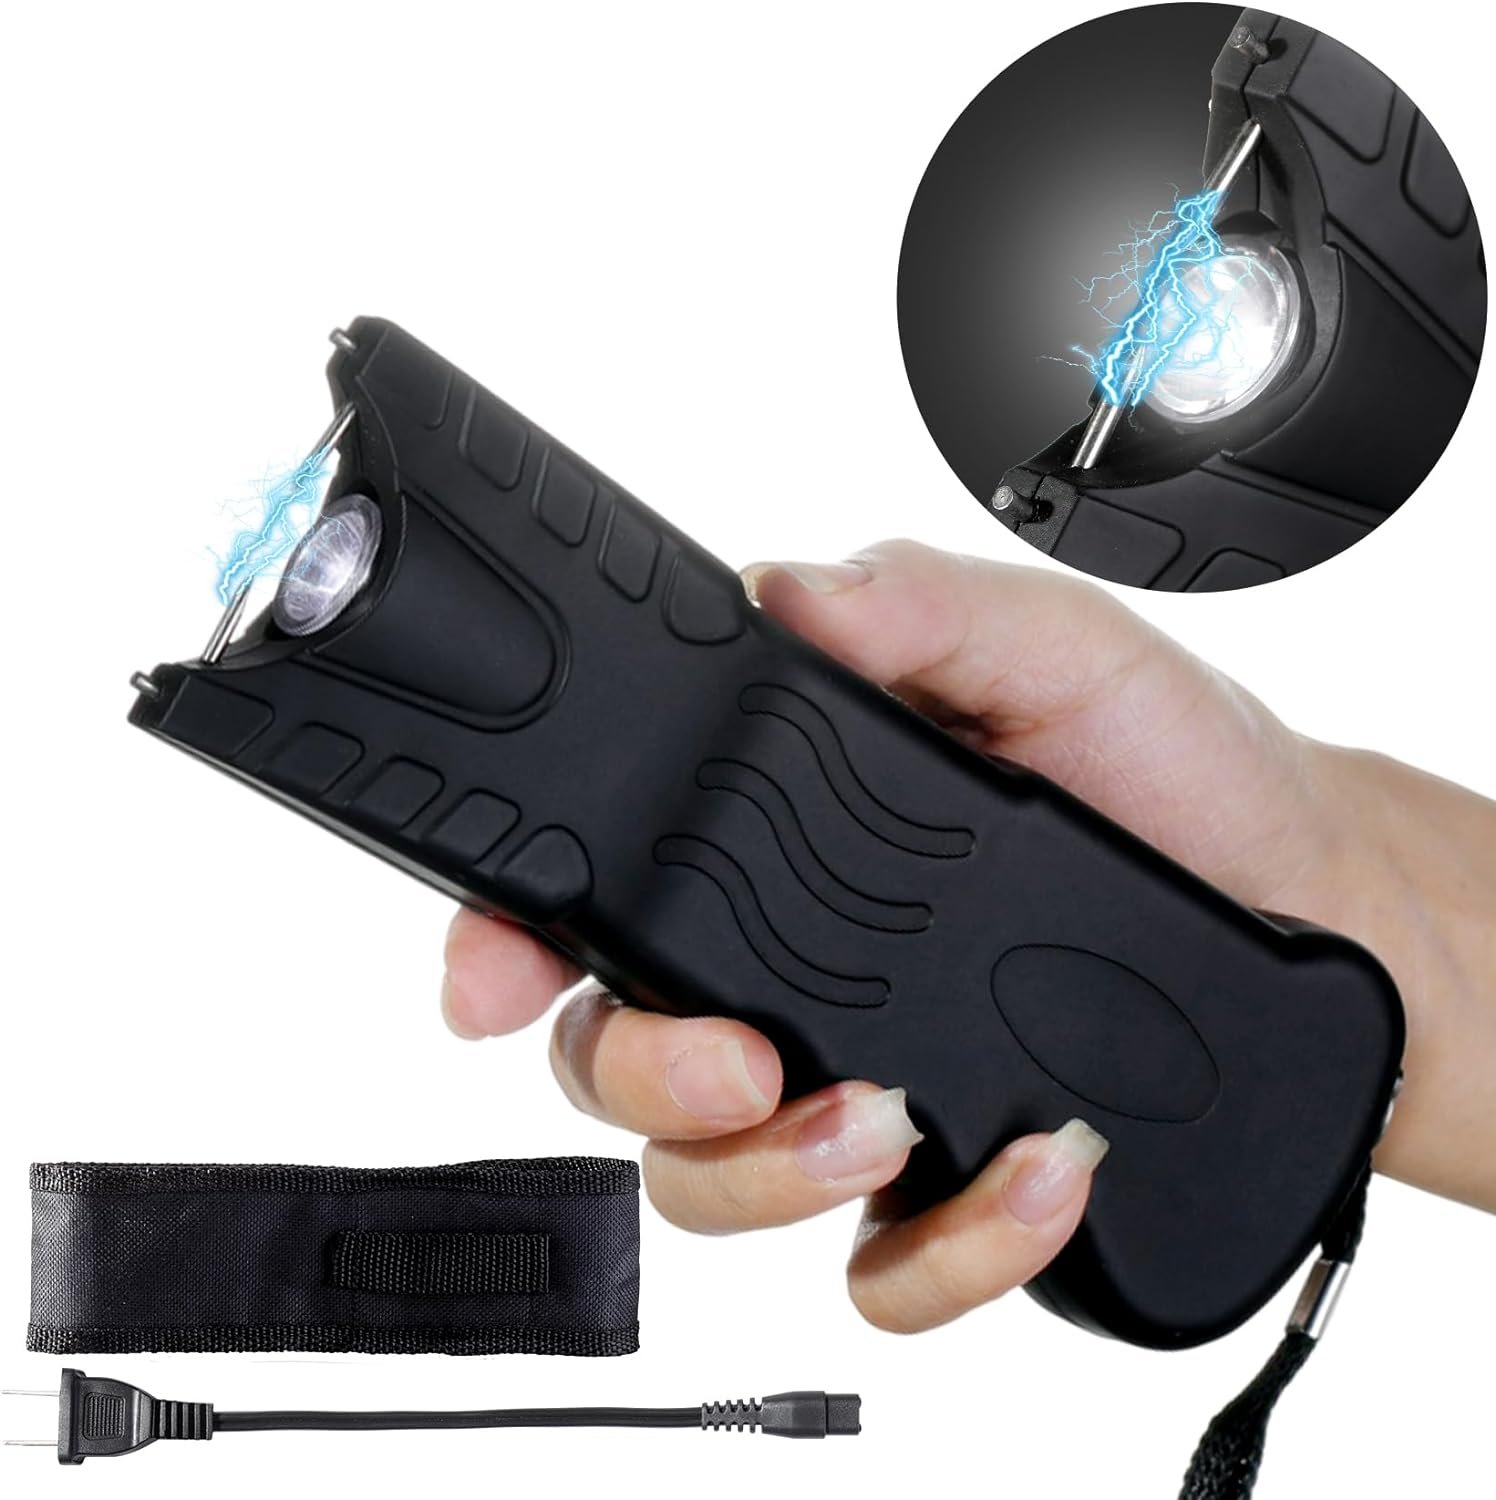 AIMHUNTER Stun Gun for Self Defense Protection-Stun Gun Protection for Women-Rechargeable Stun Gun with LED Flashlight, Black (Black)